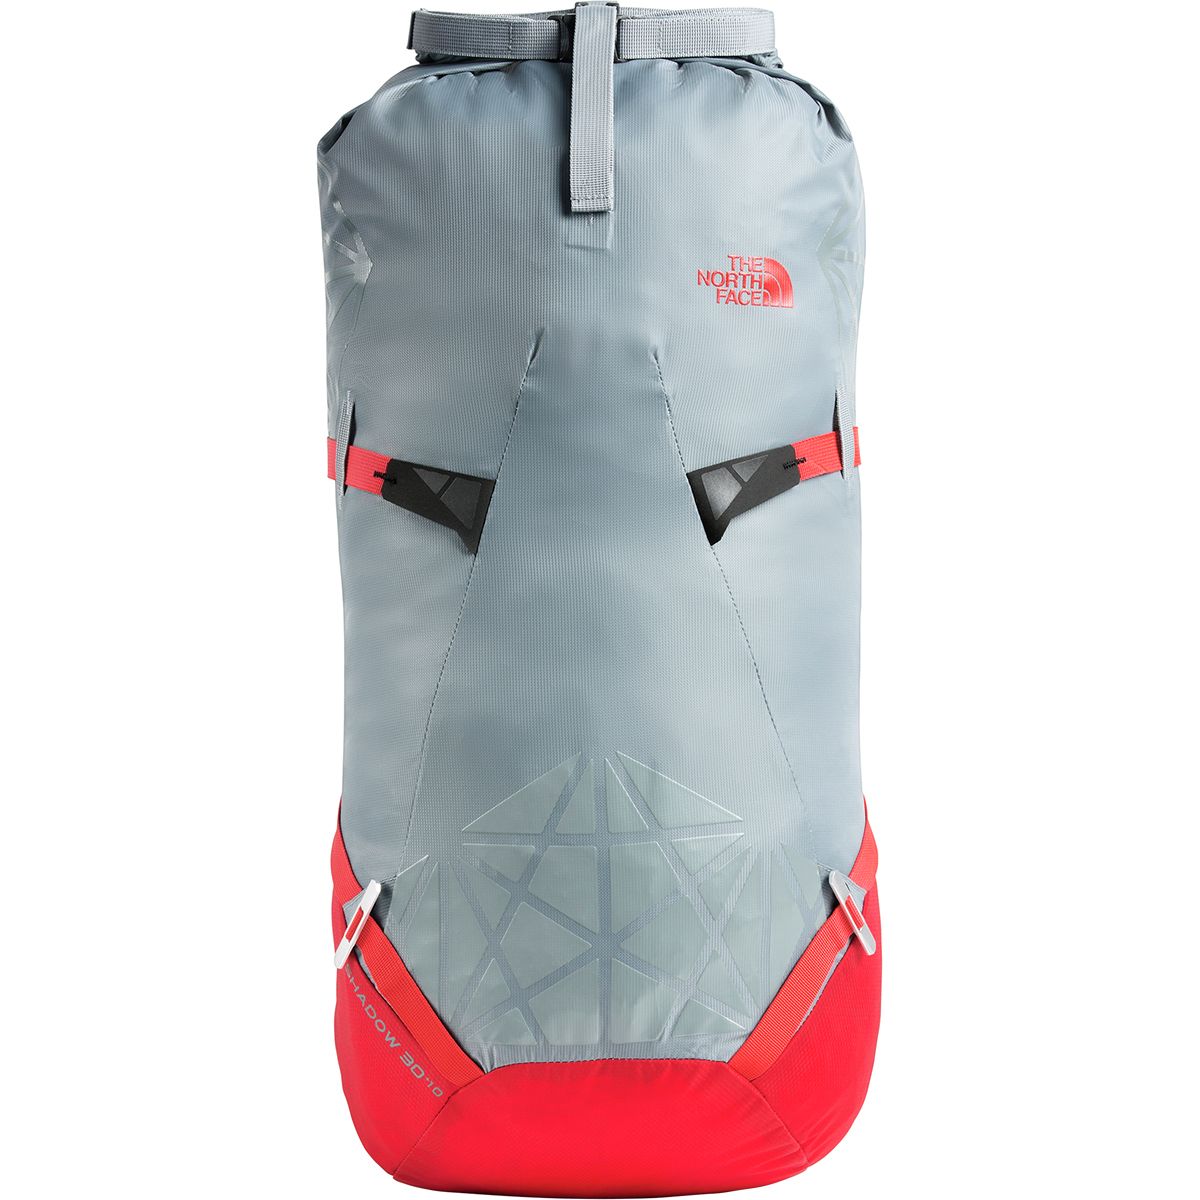 biggest north face backpack